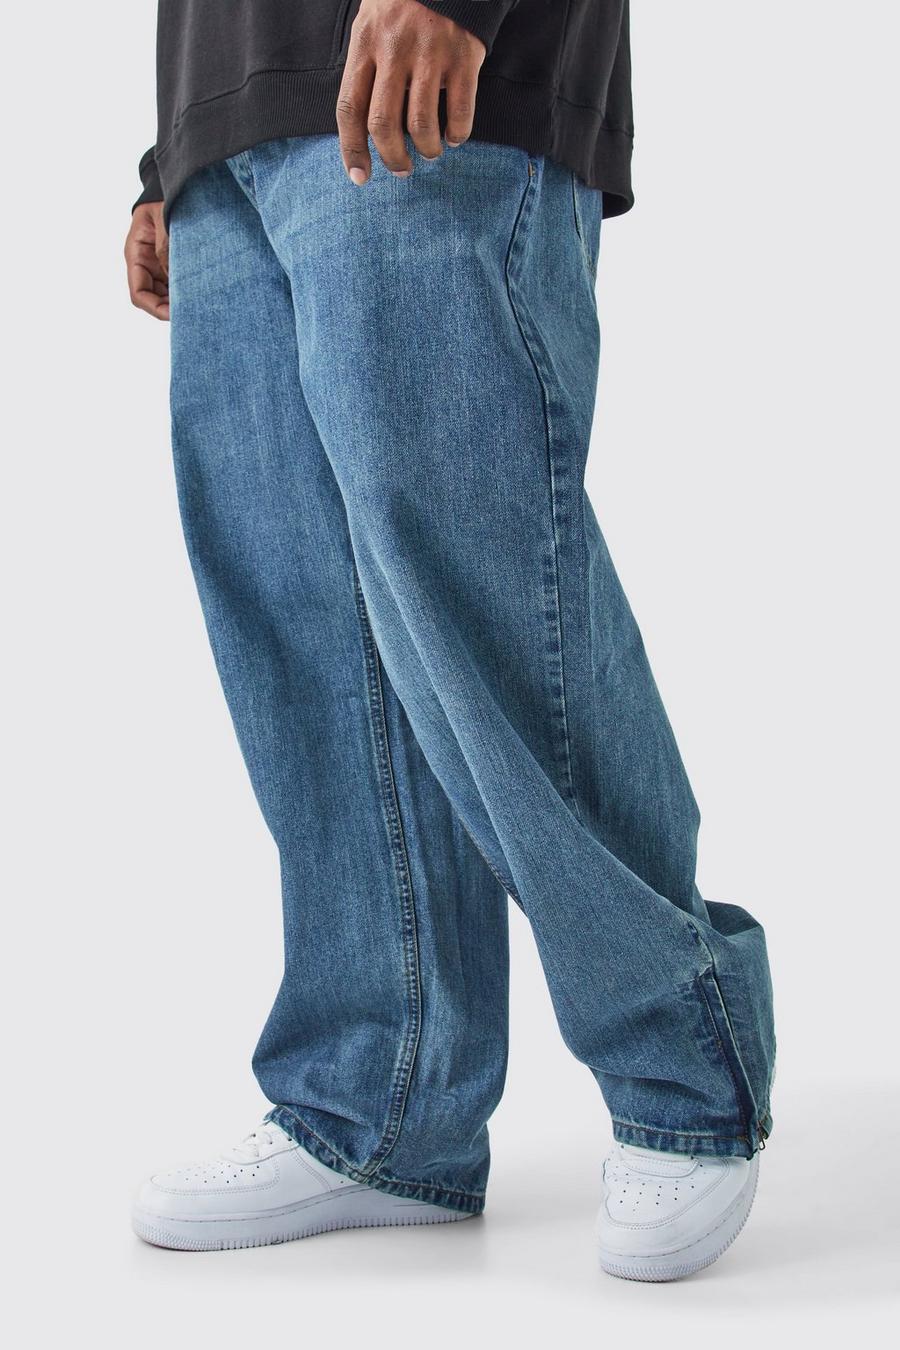 Grande taille - Jean large zippé, Antique blue image number 1